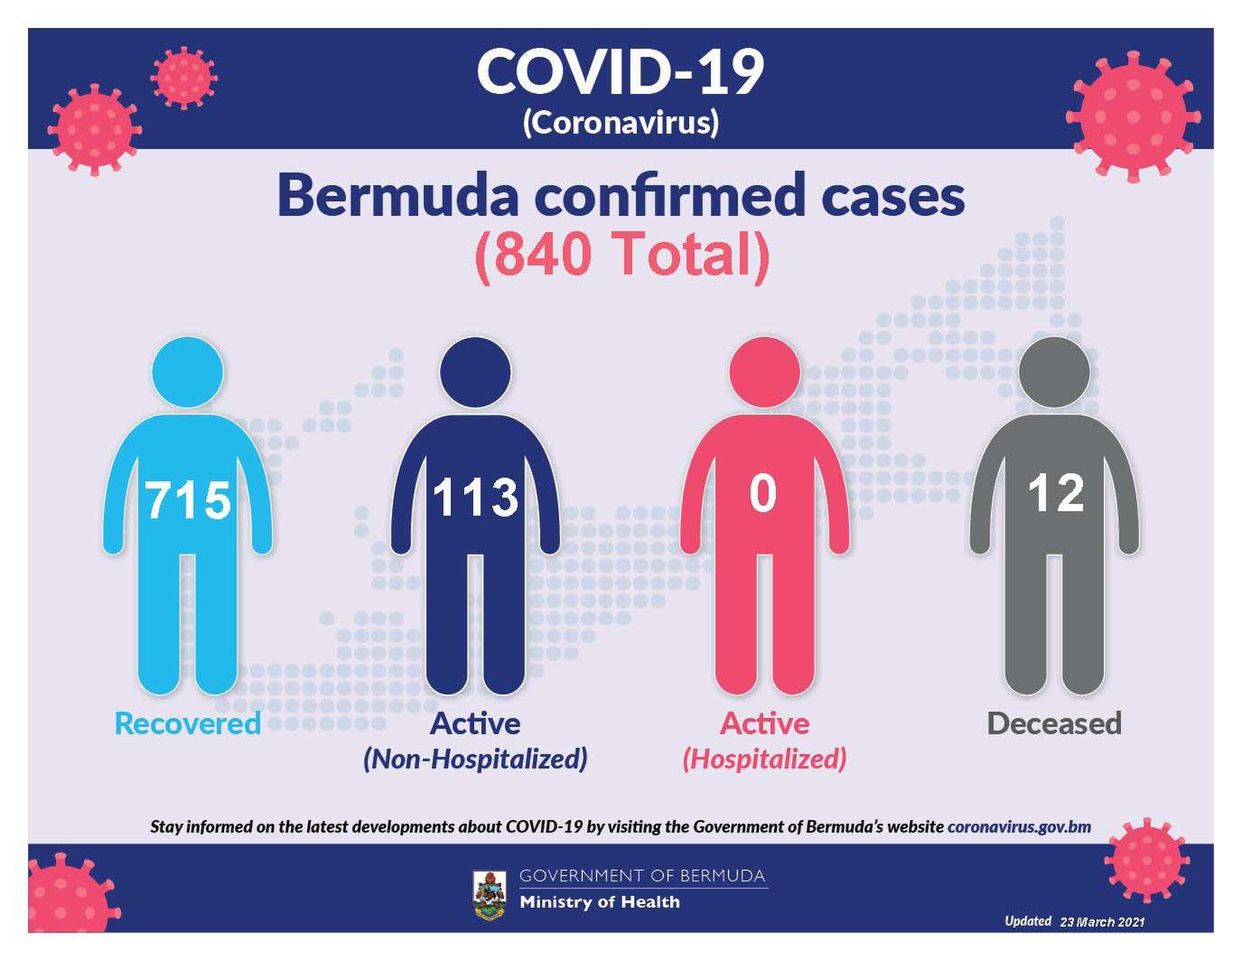 10 new COVID-19 cases reported in Bermuda, 23 March 2021